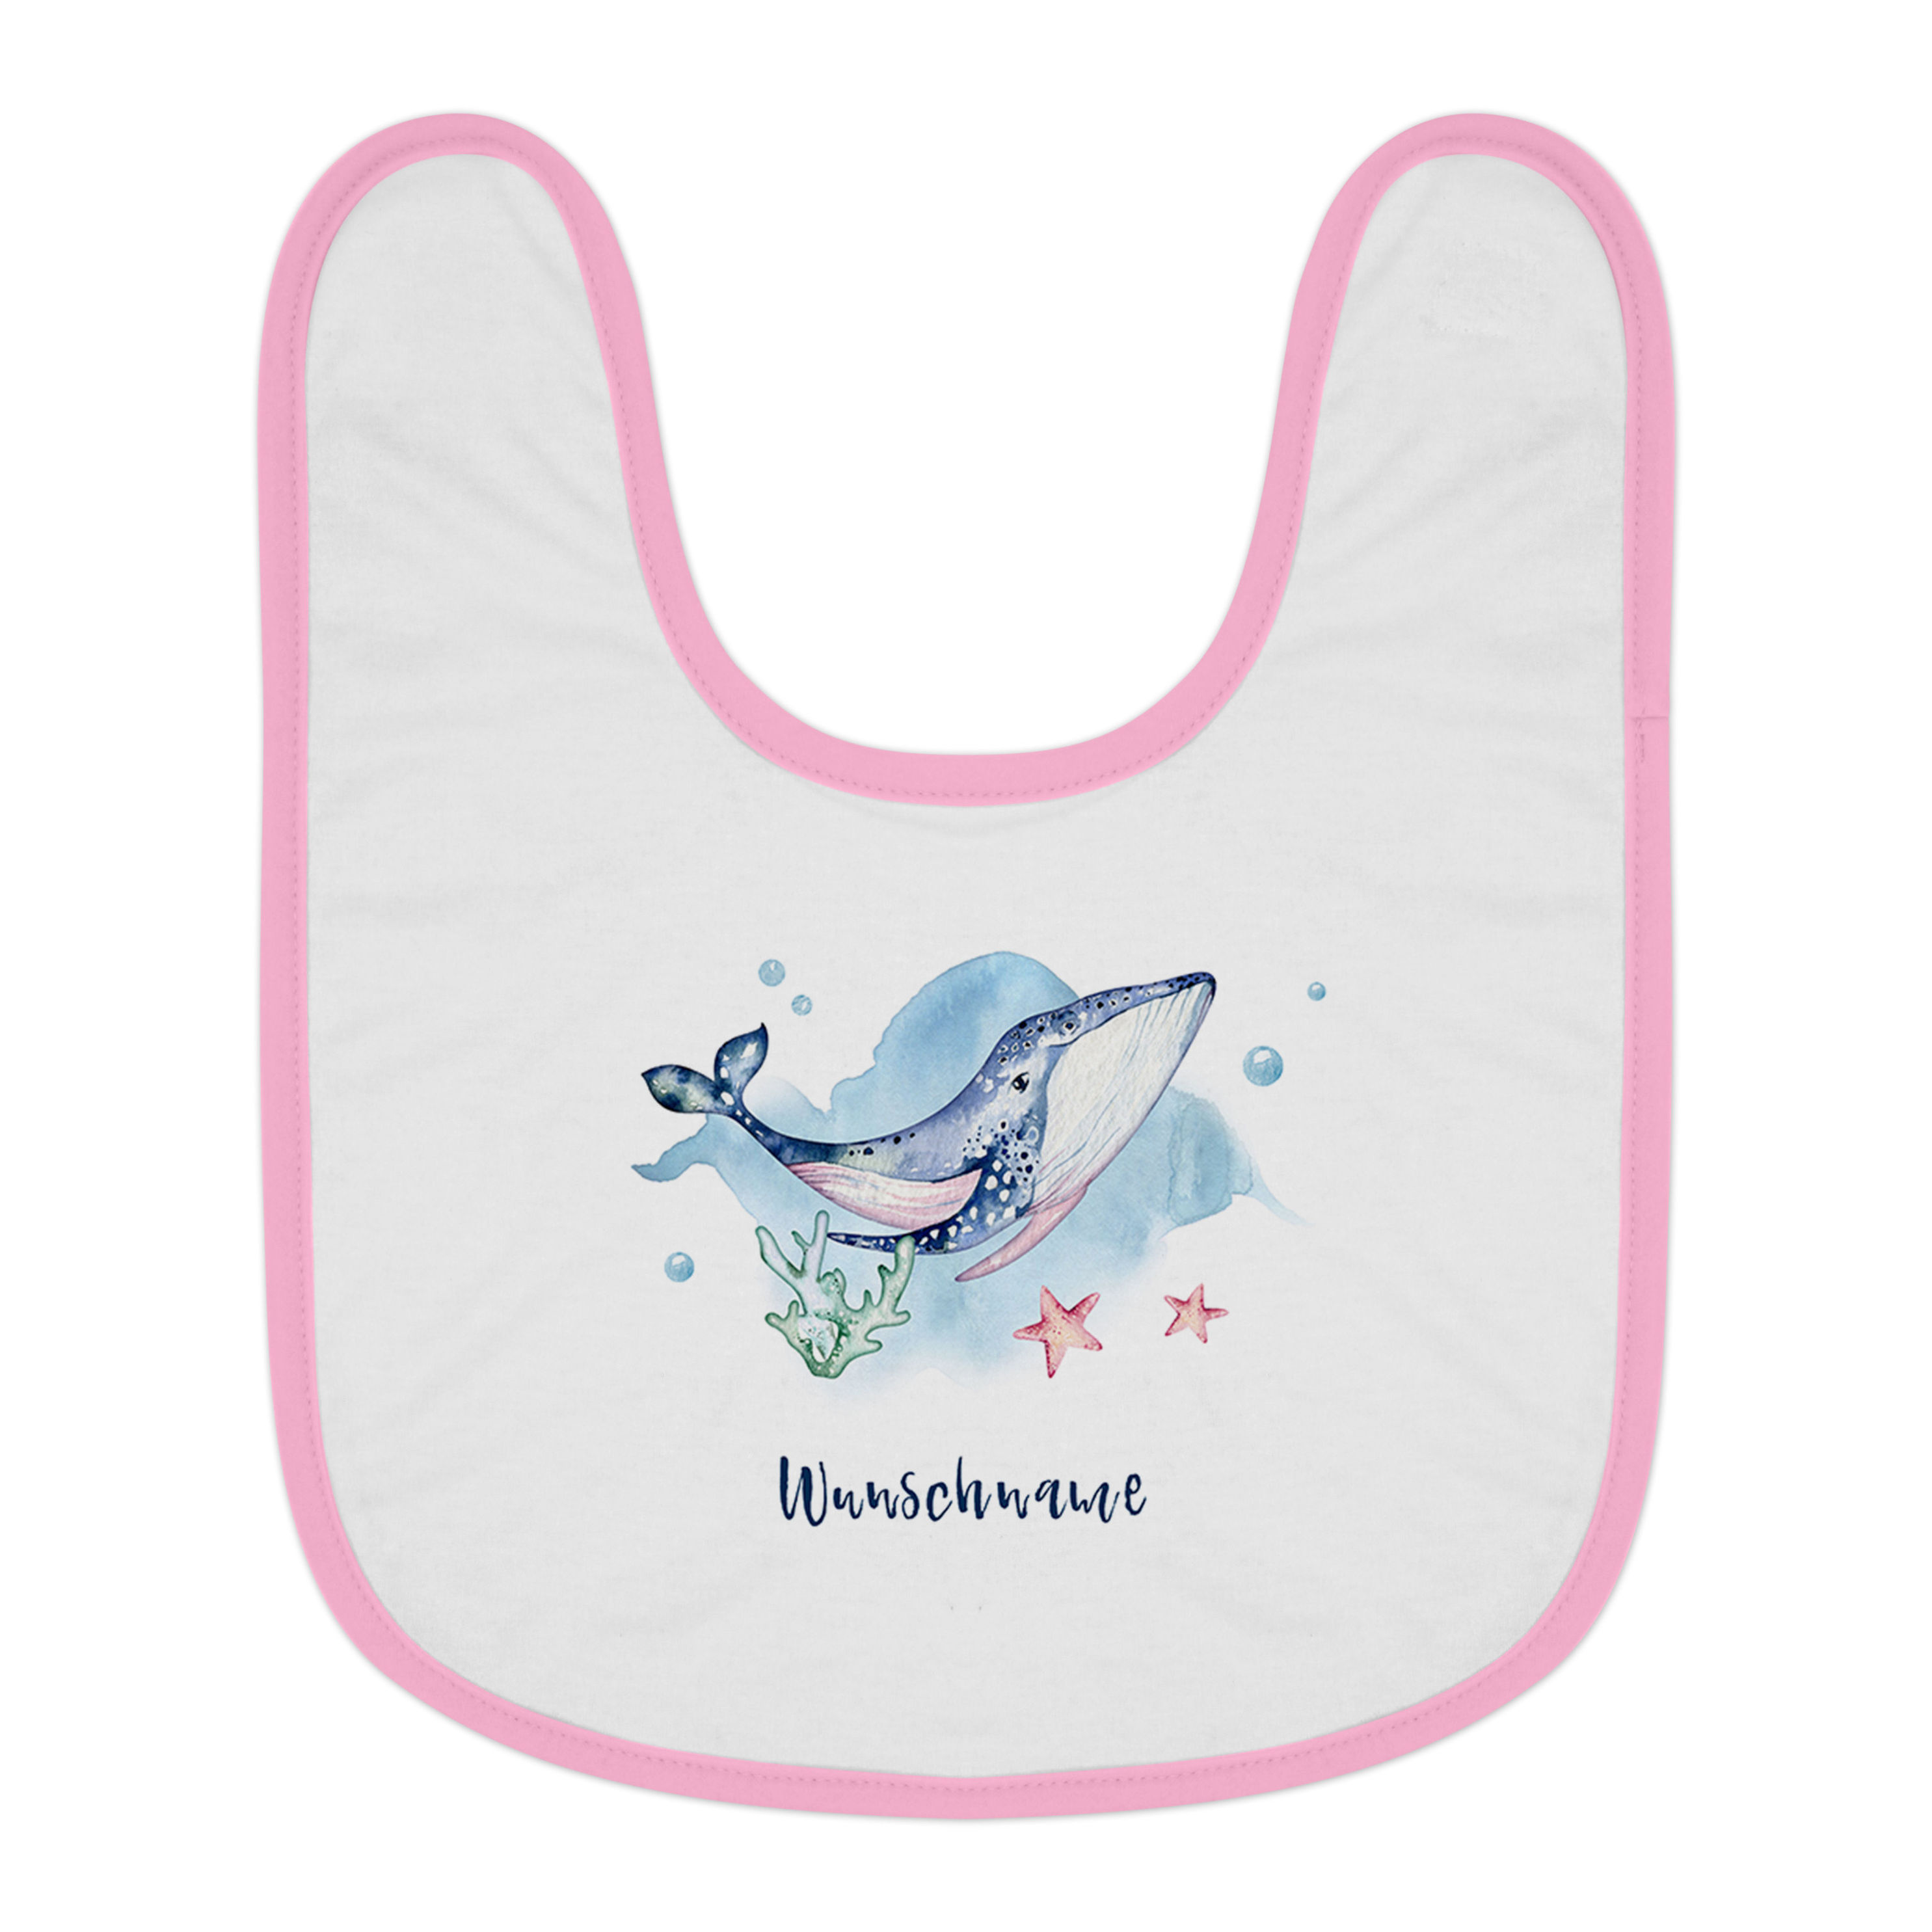 Baby-Lätzchen mit Namen, rosa Motiv: Wal bestellen | Weltbild.de